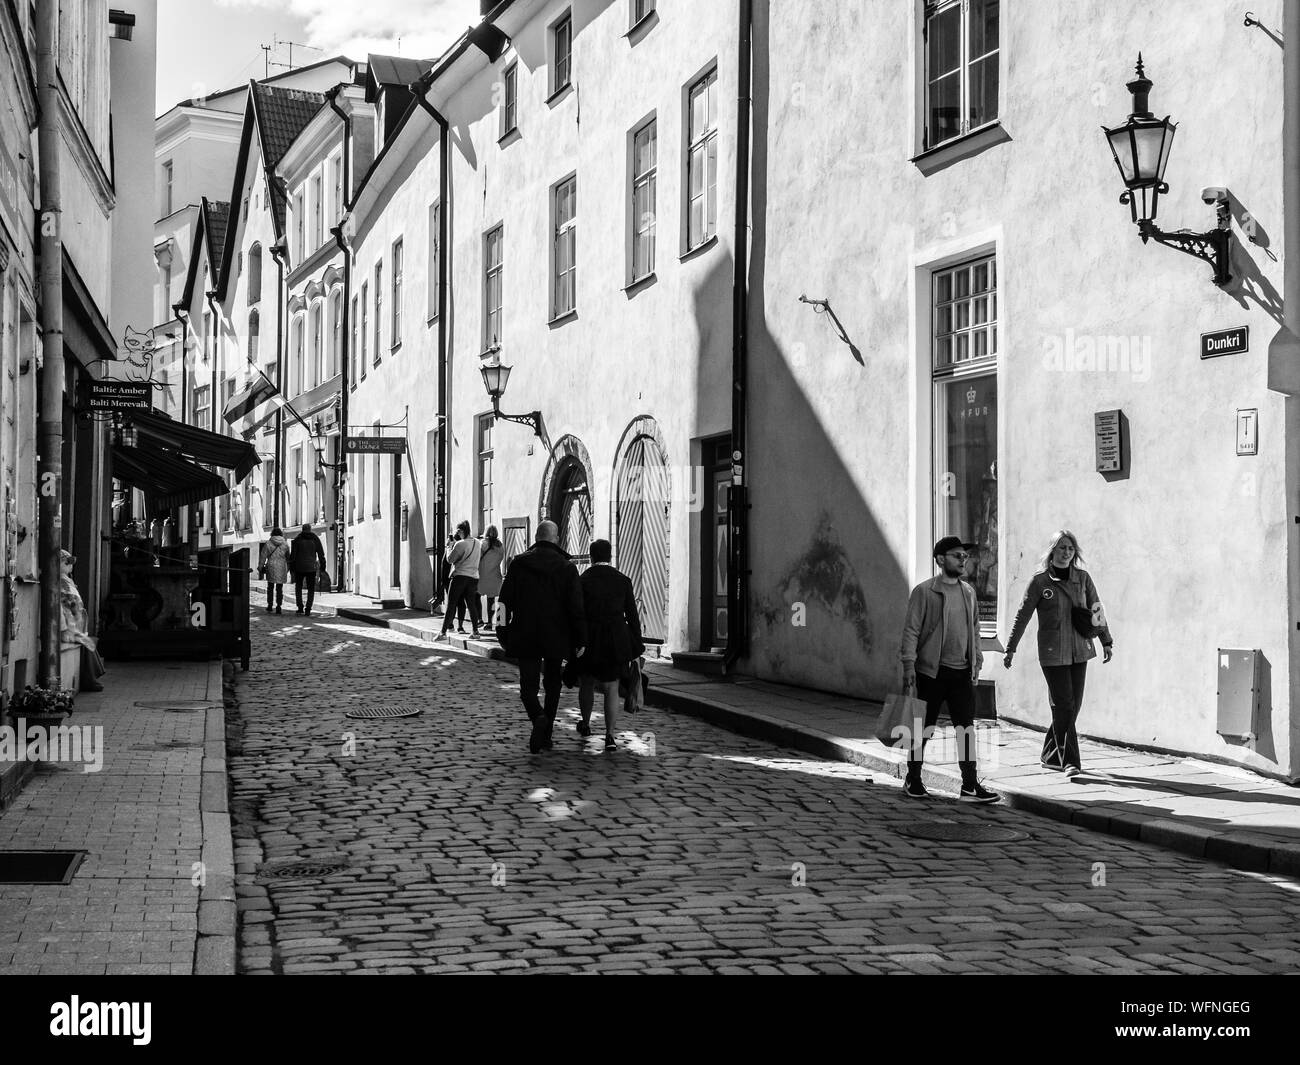 Tallinn, Estonia - May 26, 2019: People walking on downtown in Old town in Tallinn. Stock Photo